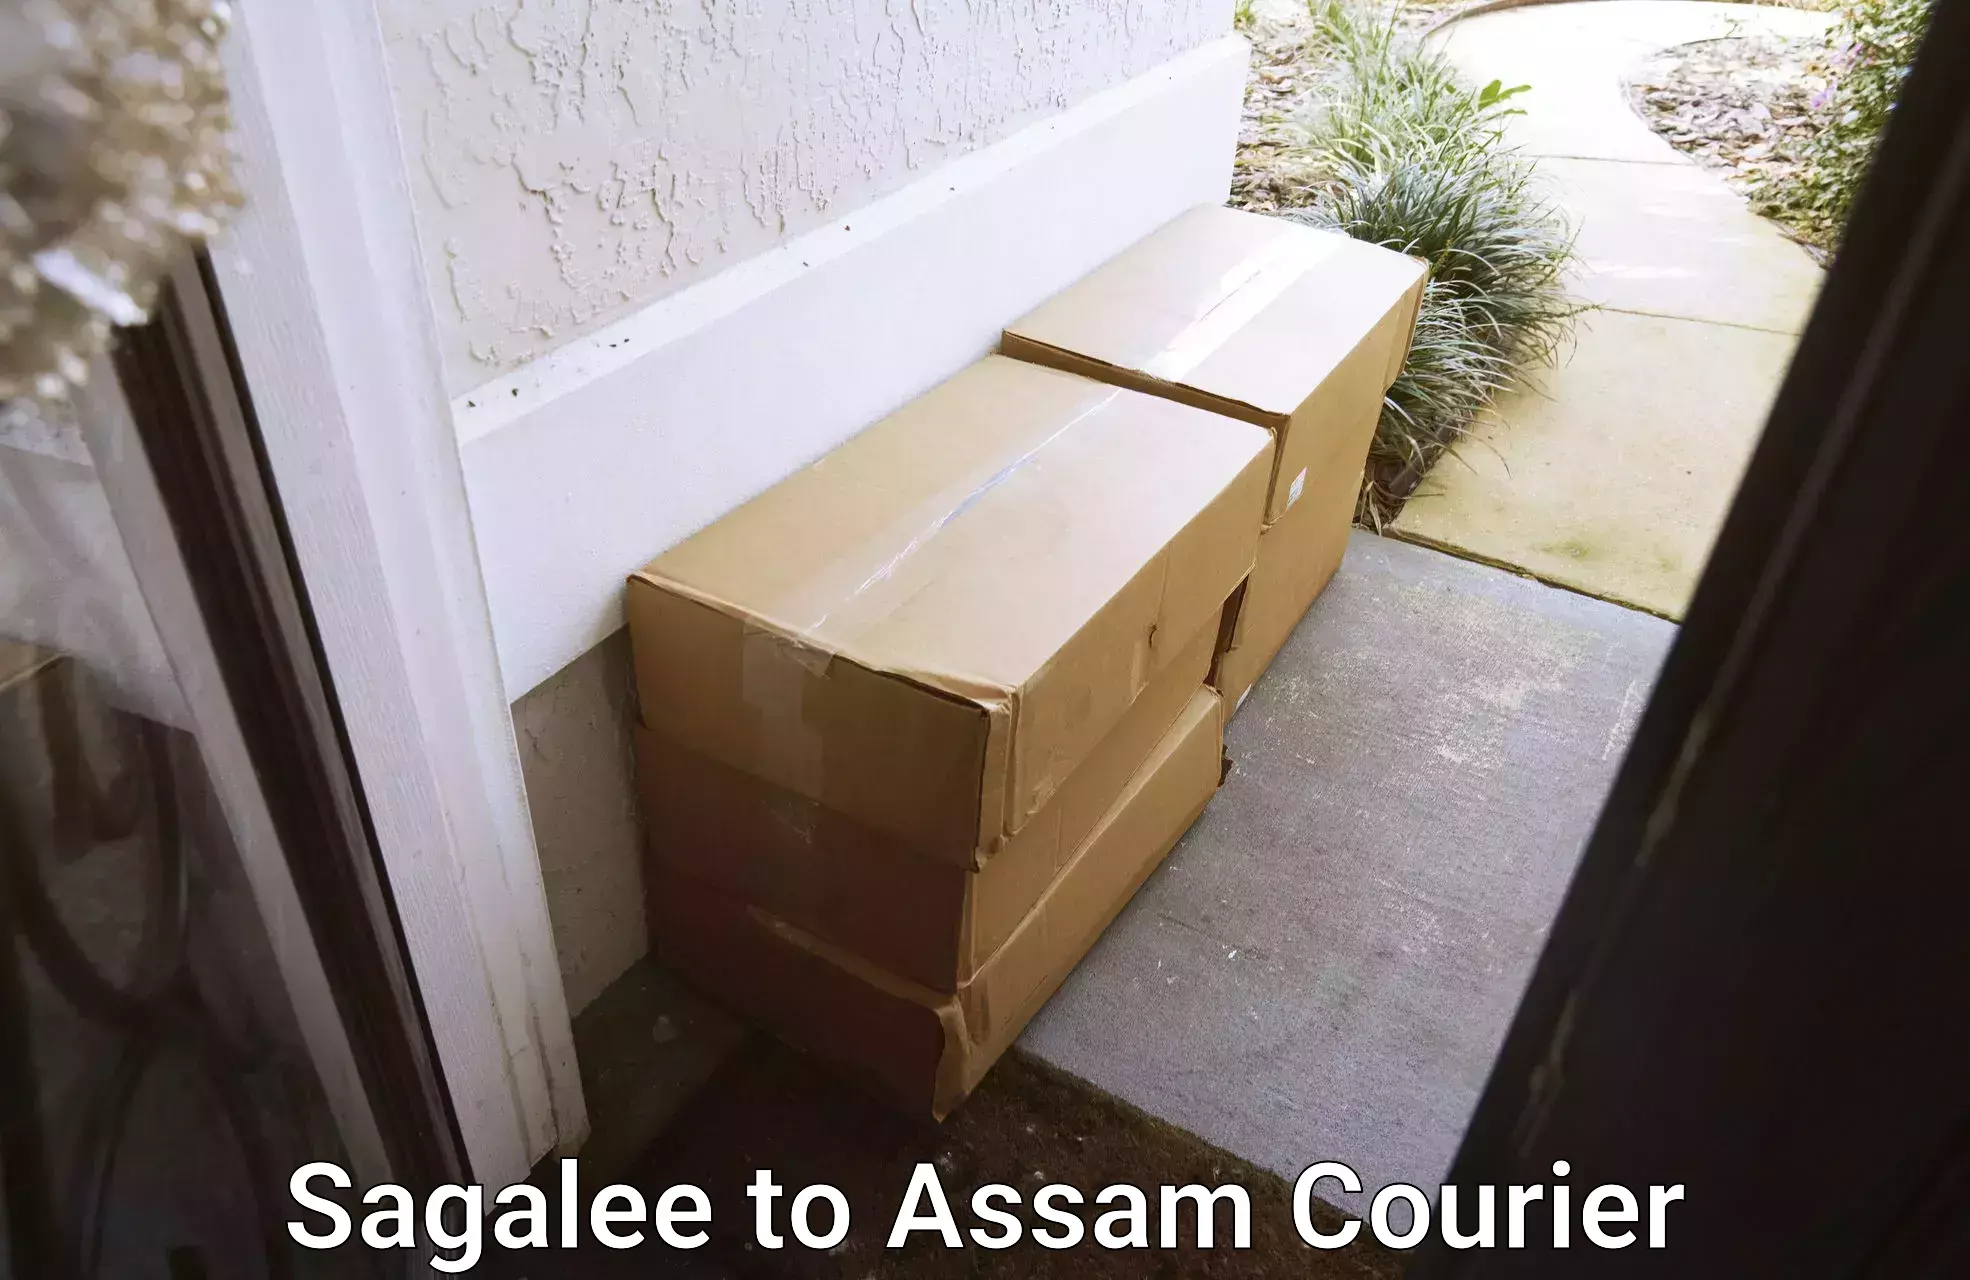 Courier service comparison Sagalee to Teok